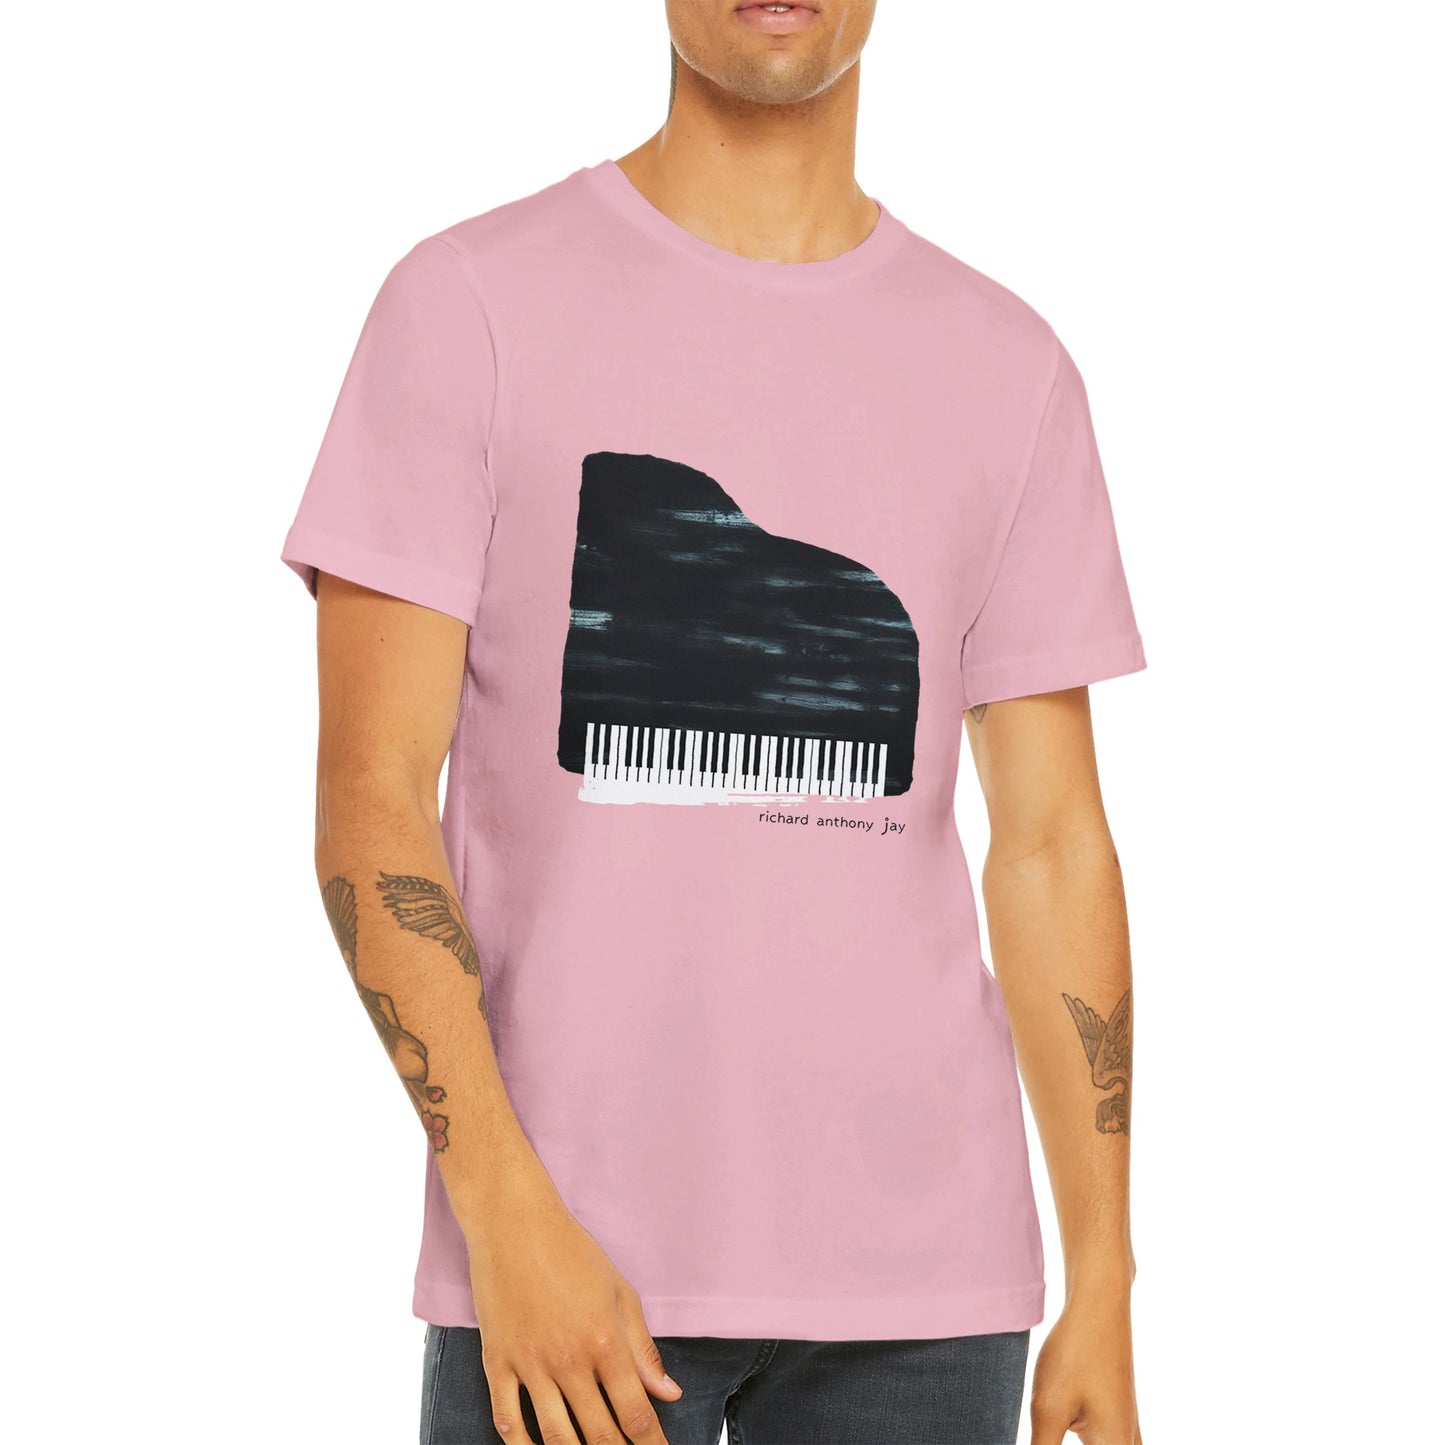 SOLO PIANO I (t-shirt)